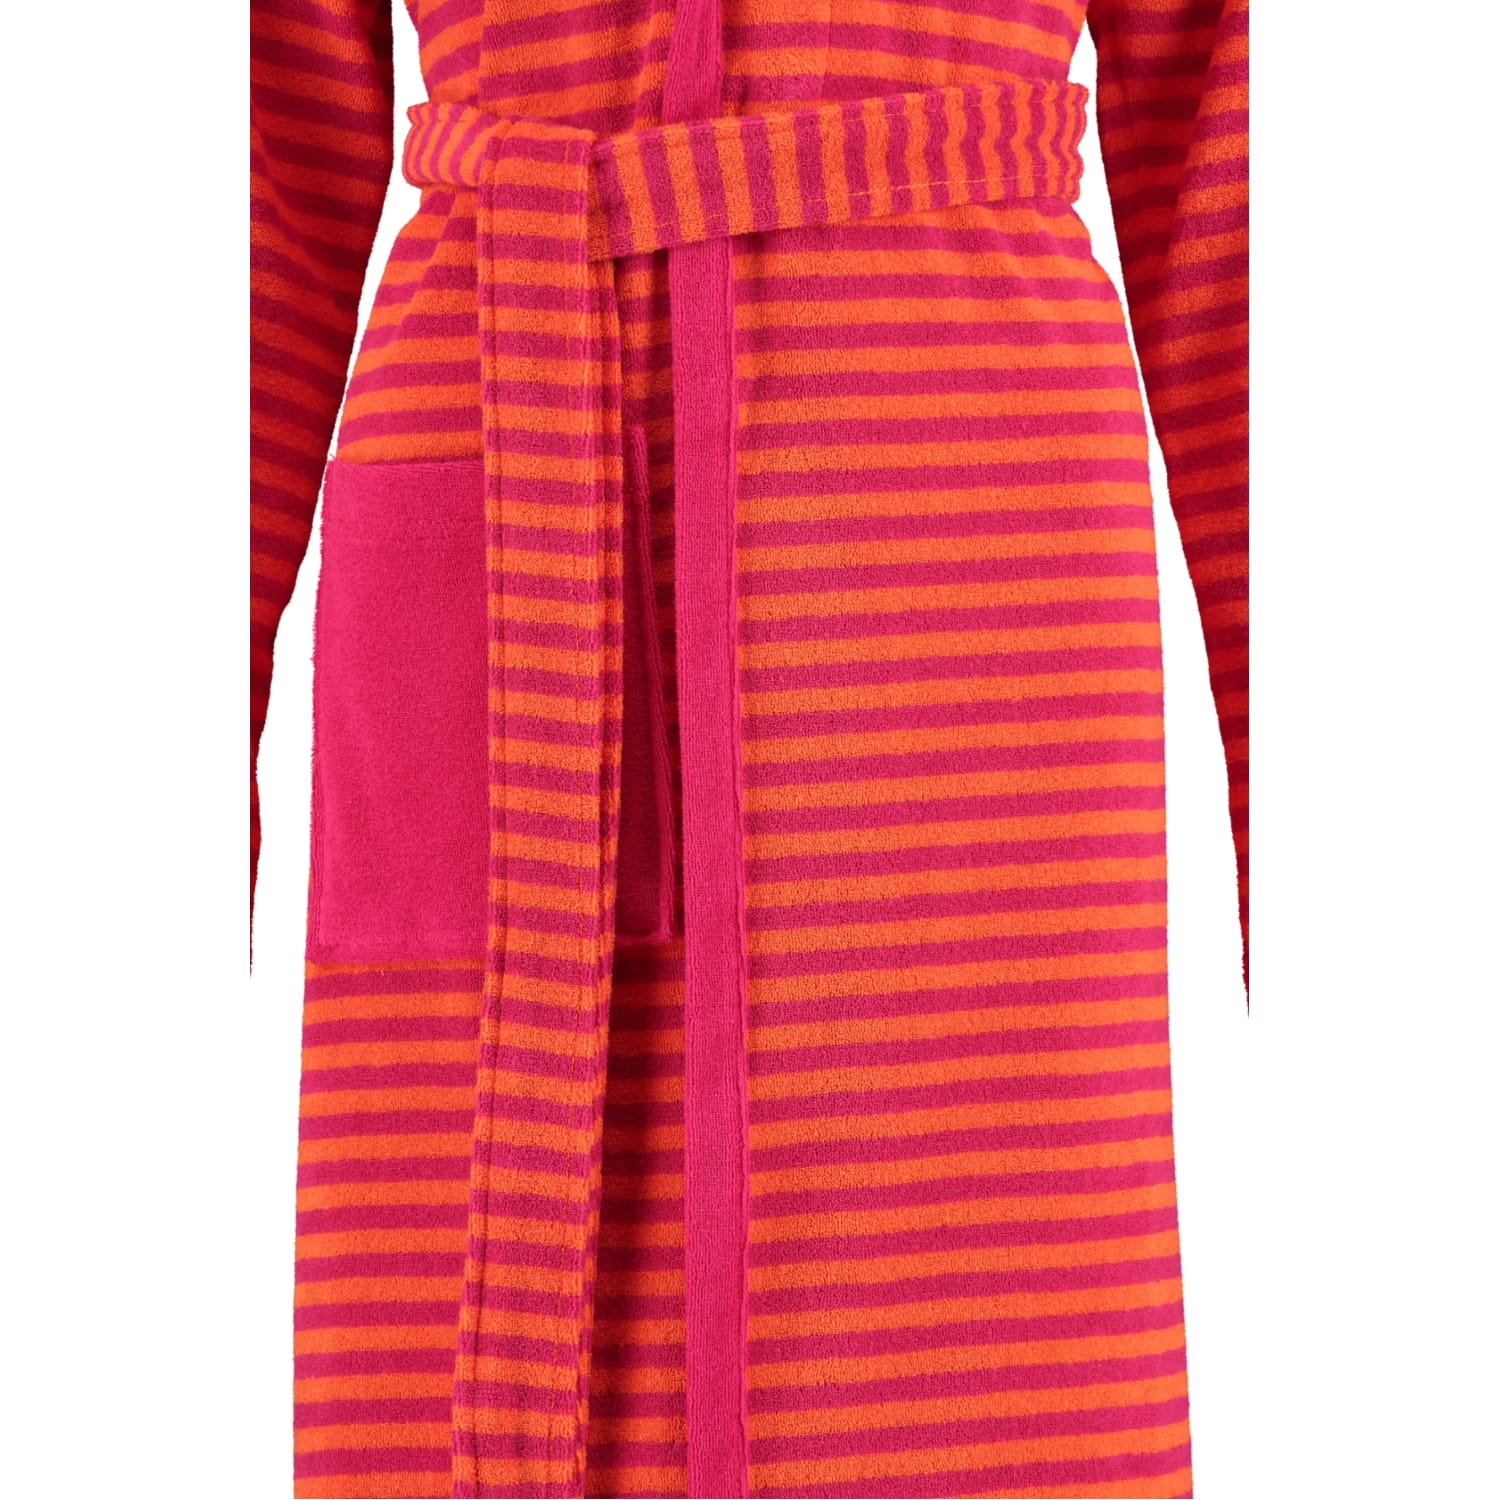 Esprit Damen Bademantel Striped Hoody Kapuze - Farbe: raspberry - 001 |  Damen | Bademantel